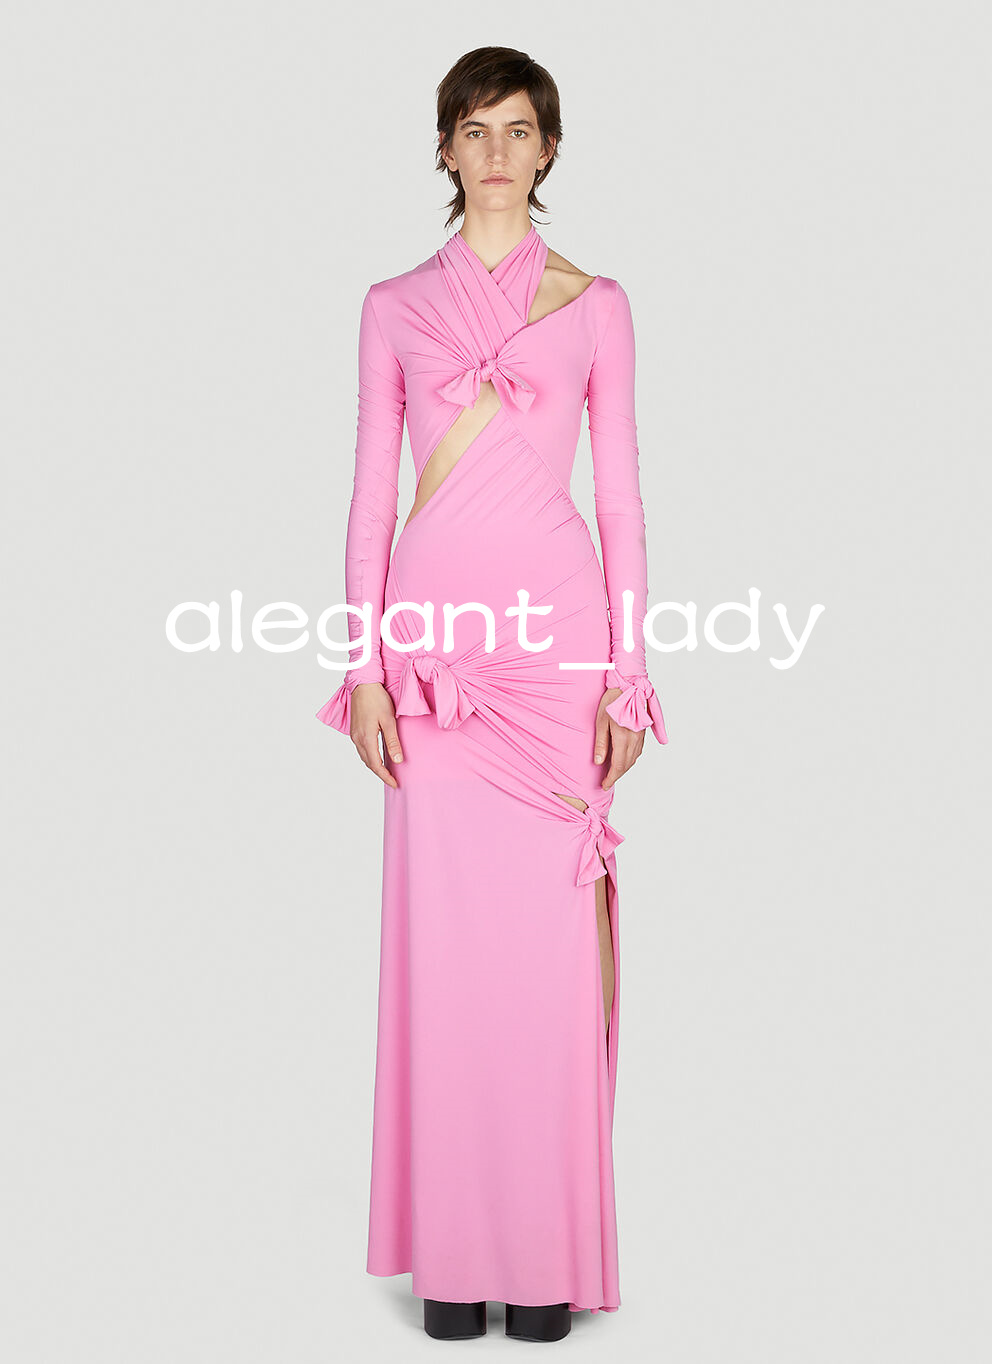 Kim Kardashian Red Carpet Evening Dresses with Long Sleeve Hot Pink Fuchsia Cutout Bow Mermaid Prom Formal Dress Wear